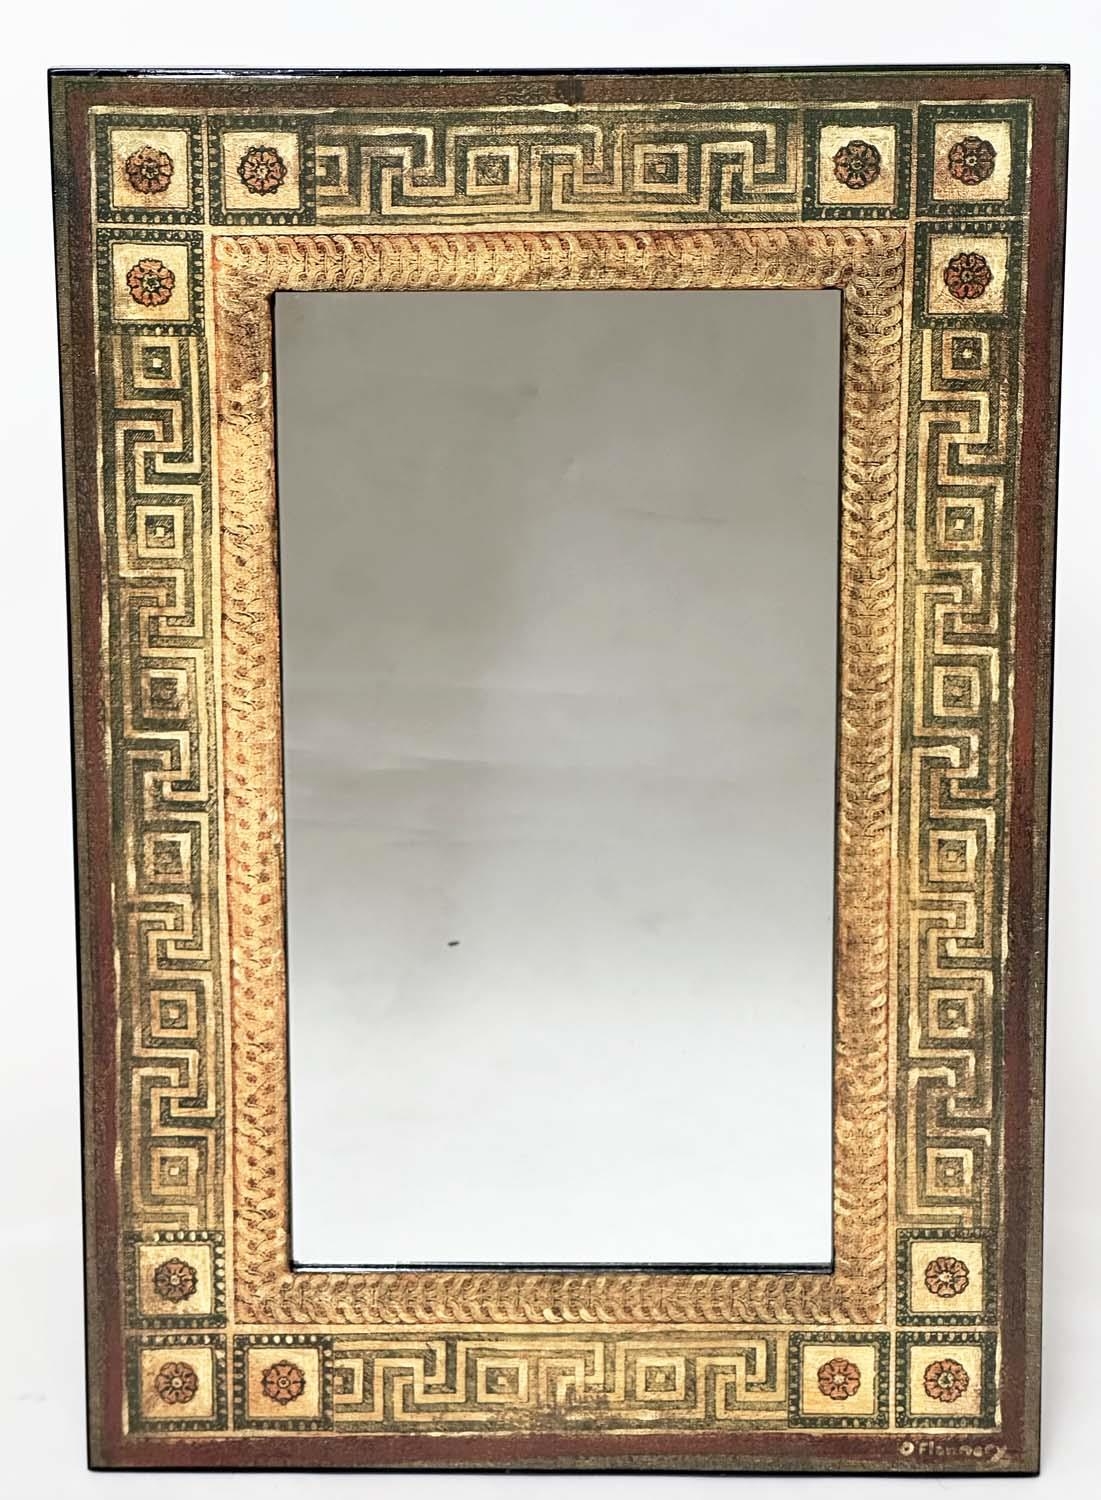 WALL MIRROR, rectangular Greek key laminated frame, 91cm H x 61cm W.